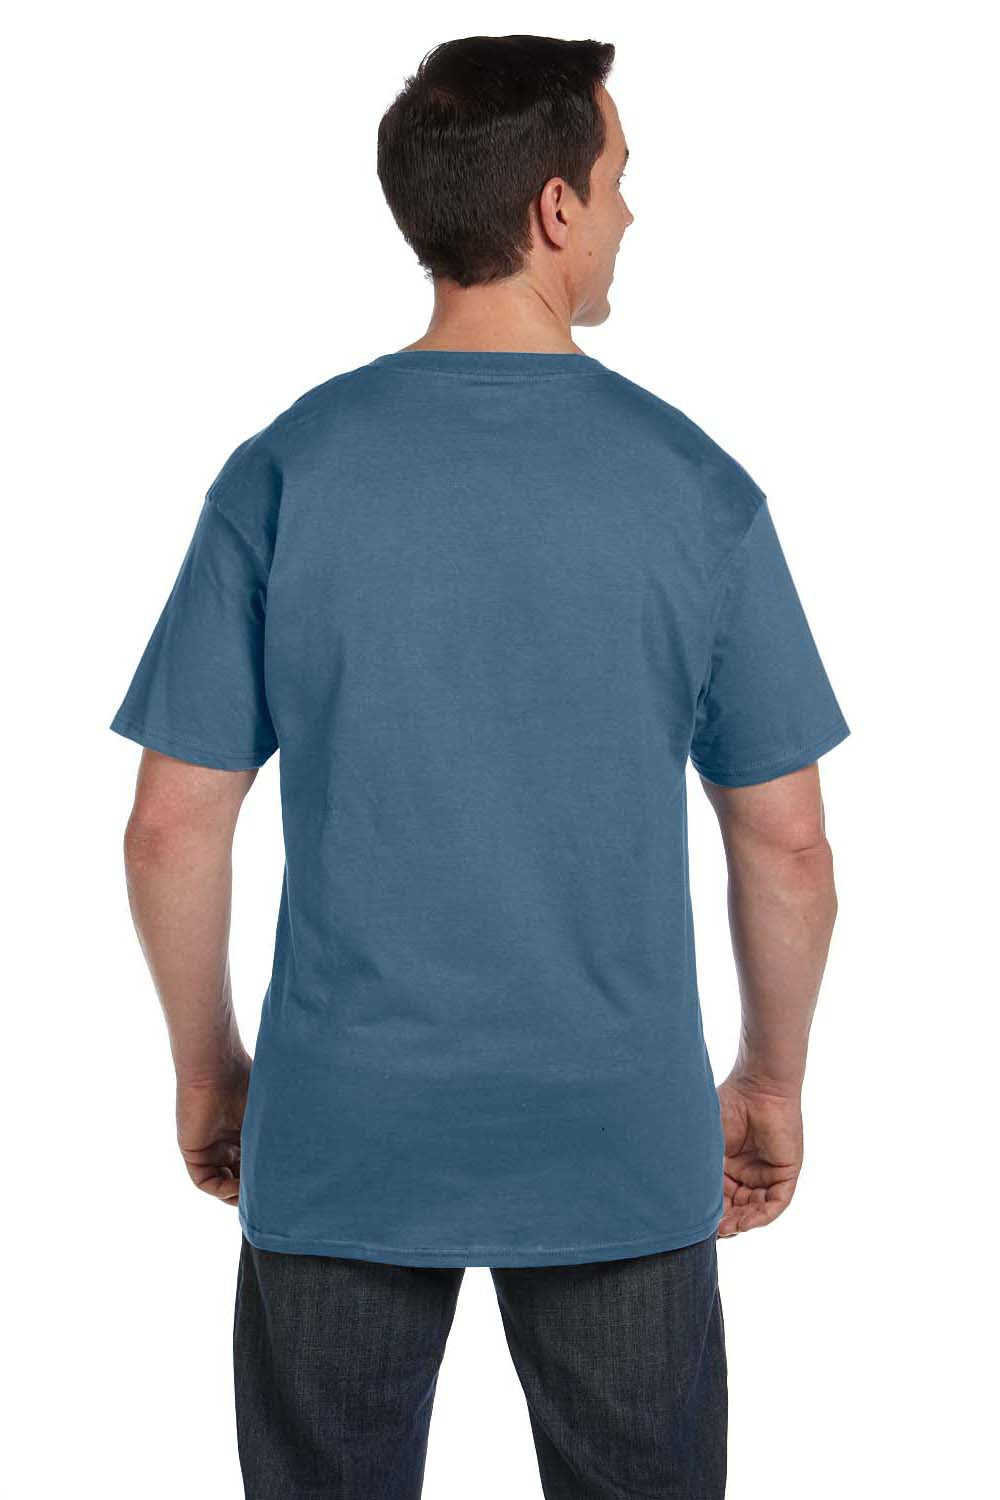 Hanes 5190P Mens Beefy-T Short Sleeve Crewneck T-Shirt w/ Pocket Denim Blue Back